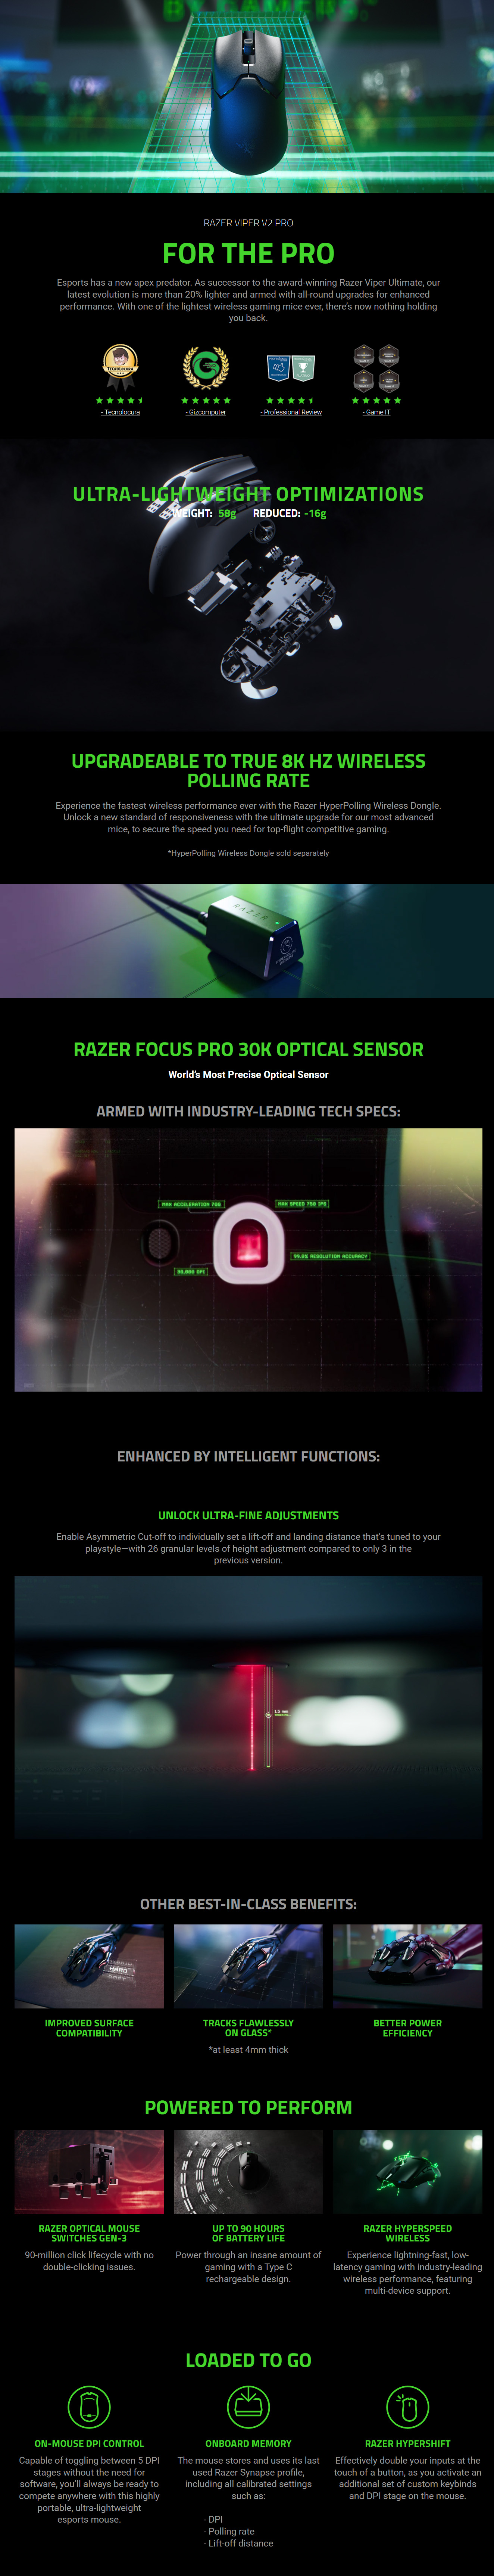 Razer-Viper-V2-Pro-Wireless-Gaming-Mouse-PUBG-Battlegrounds-Edition-RZ01-04390600-R3M1-2